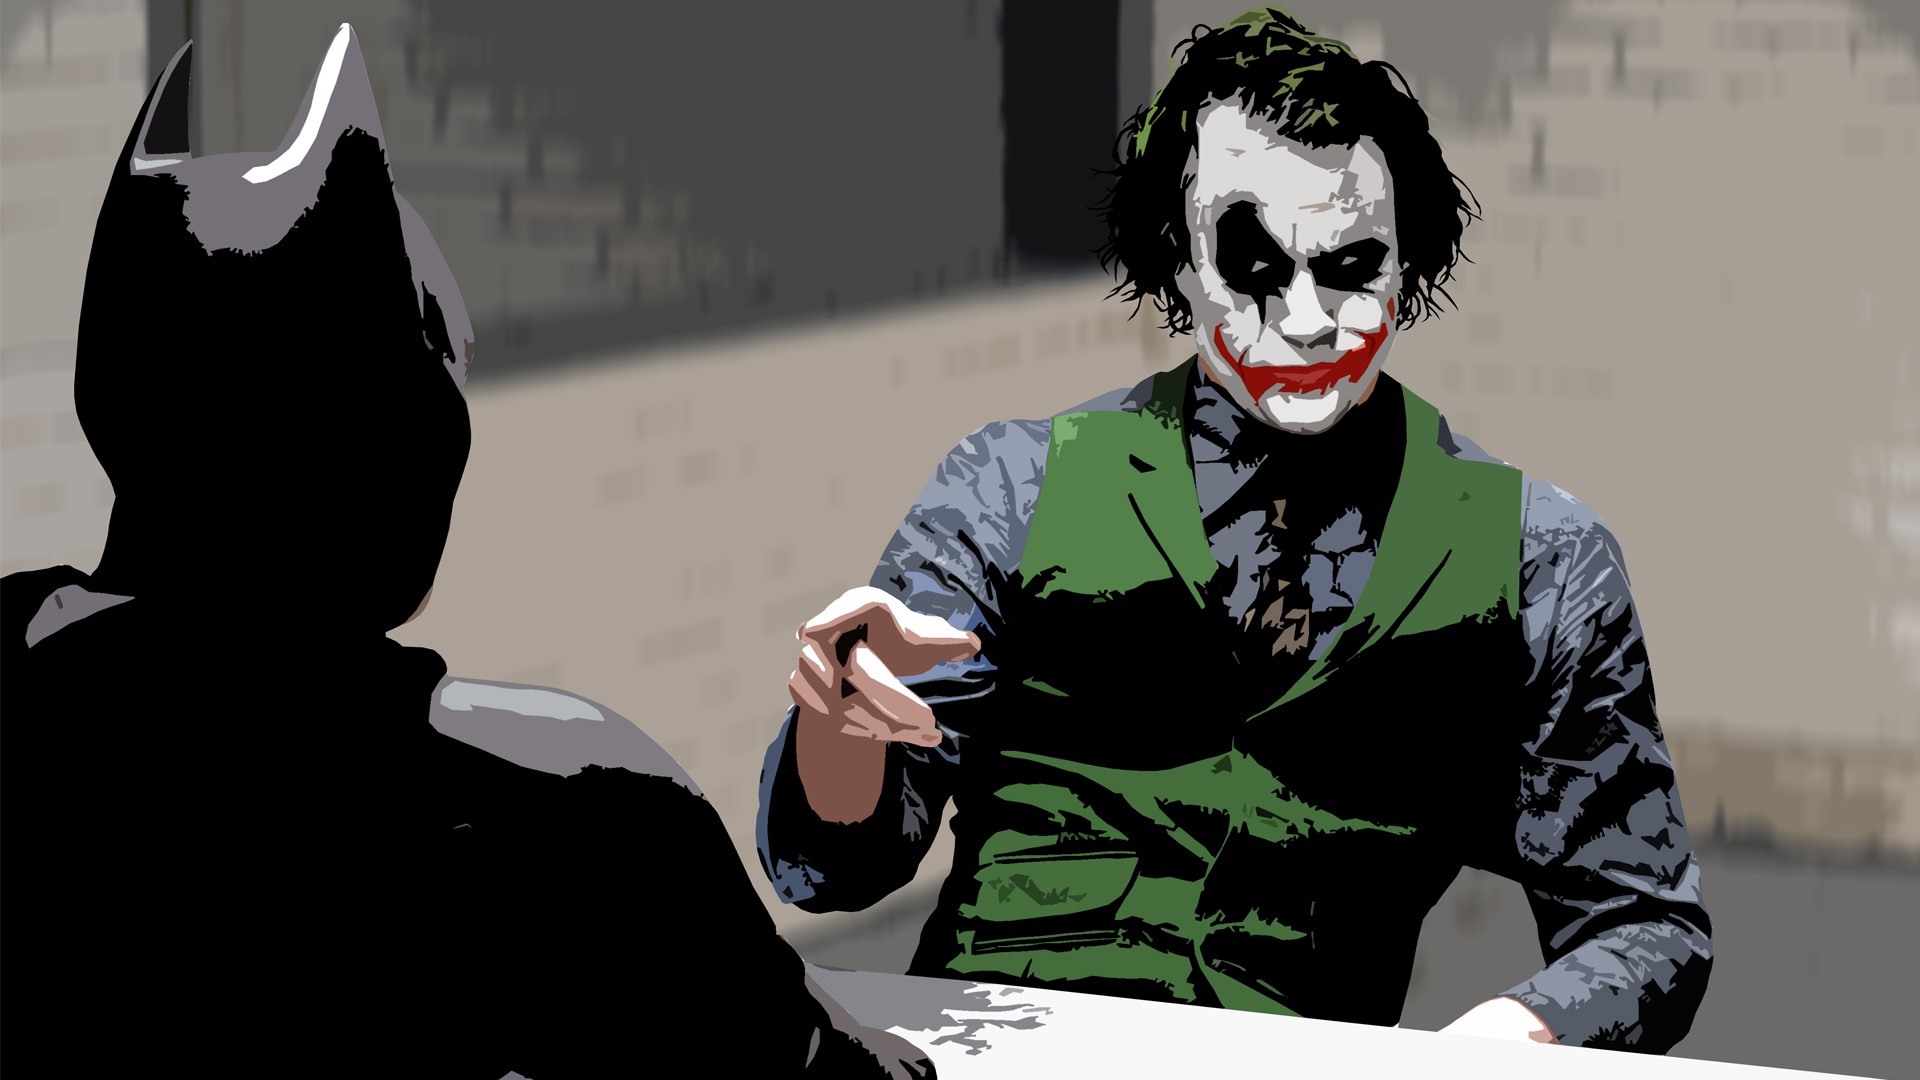 General 1920x1080 Batman The Dark Knight Joker MessenjahMatt finger pointing movies Heath Ledger actor deceased superhero villains DC Comics Warner Brothers Christopher Nolan